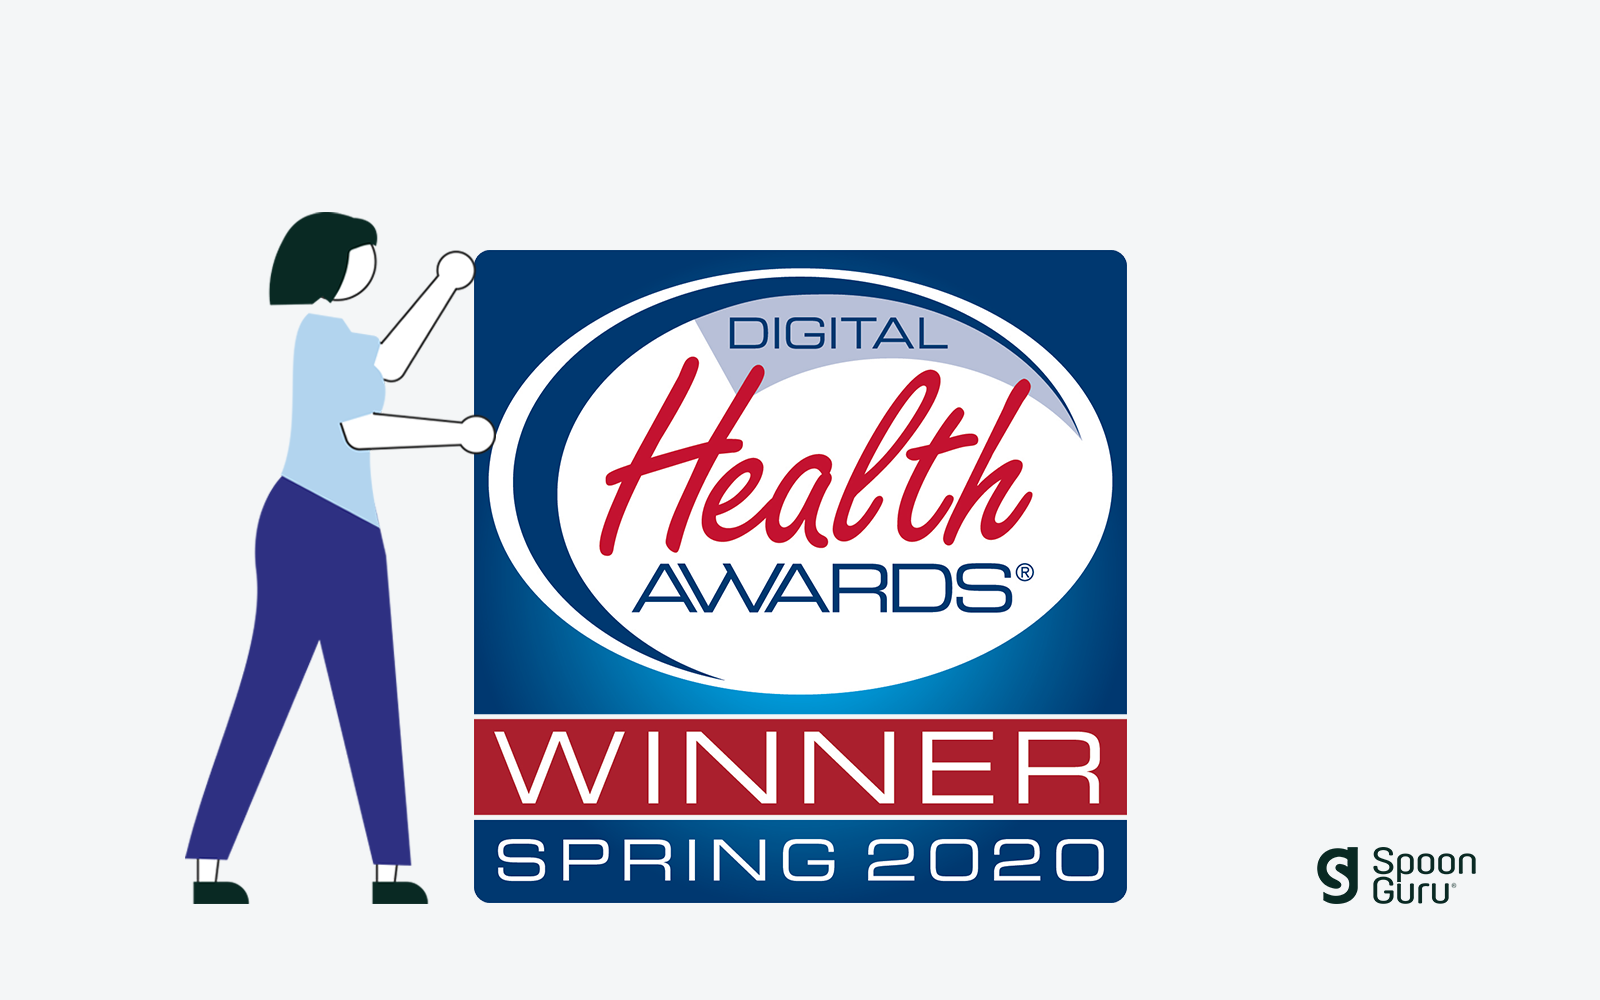 Spoon Guru’s Immunity Support TAG Wins Digital Health Award